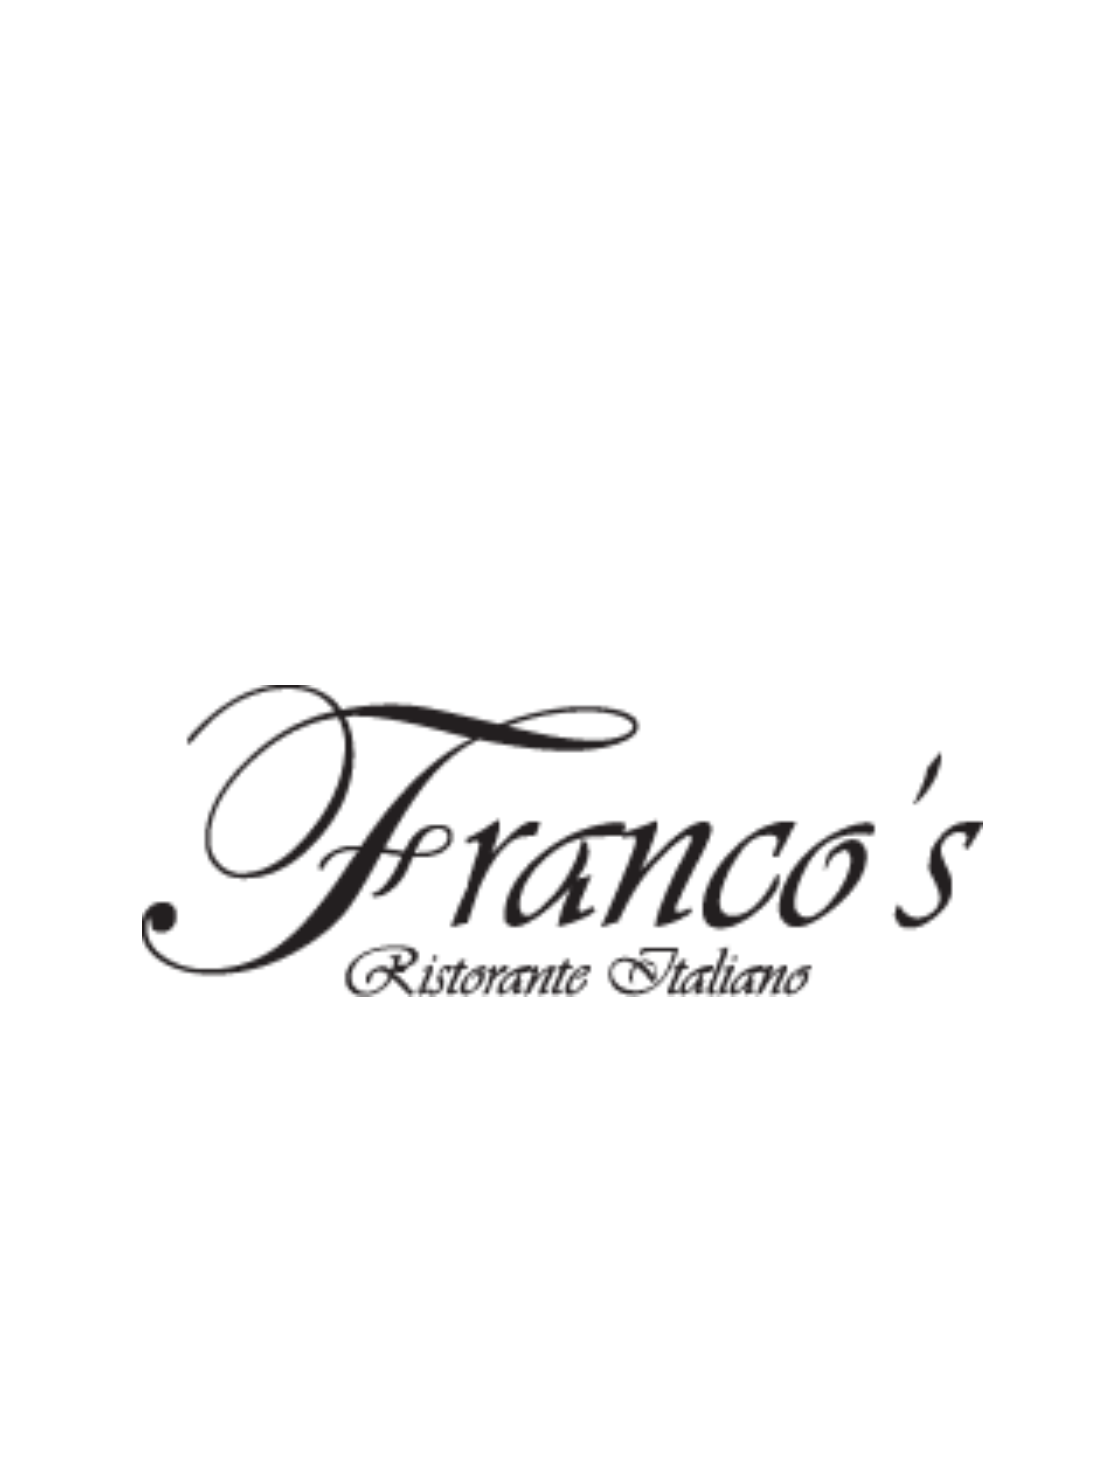 Francos Logo.png